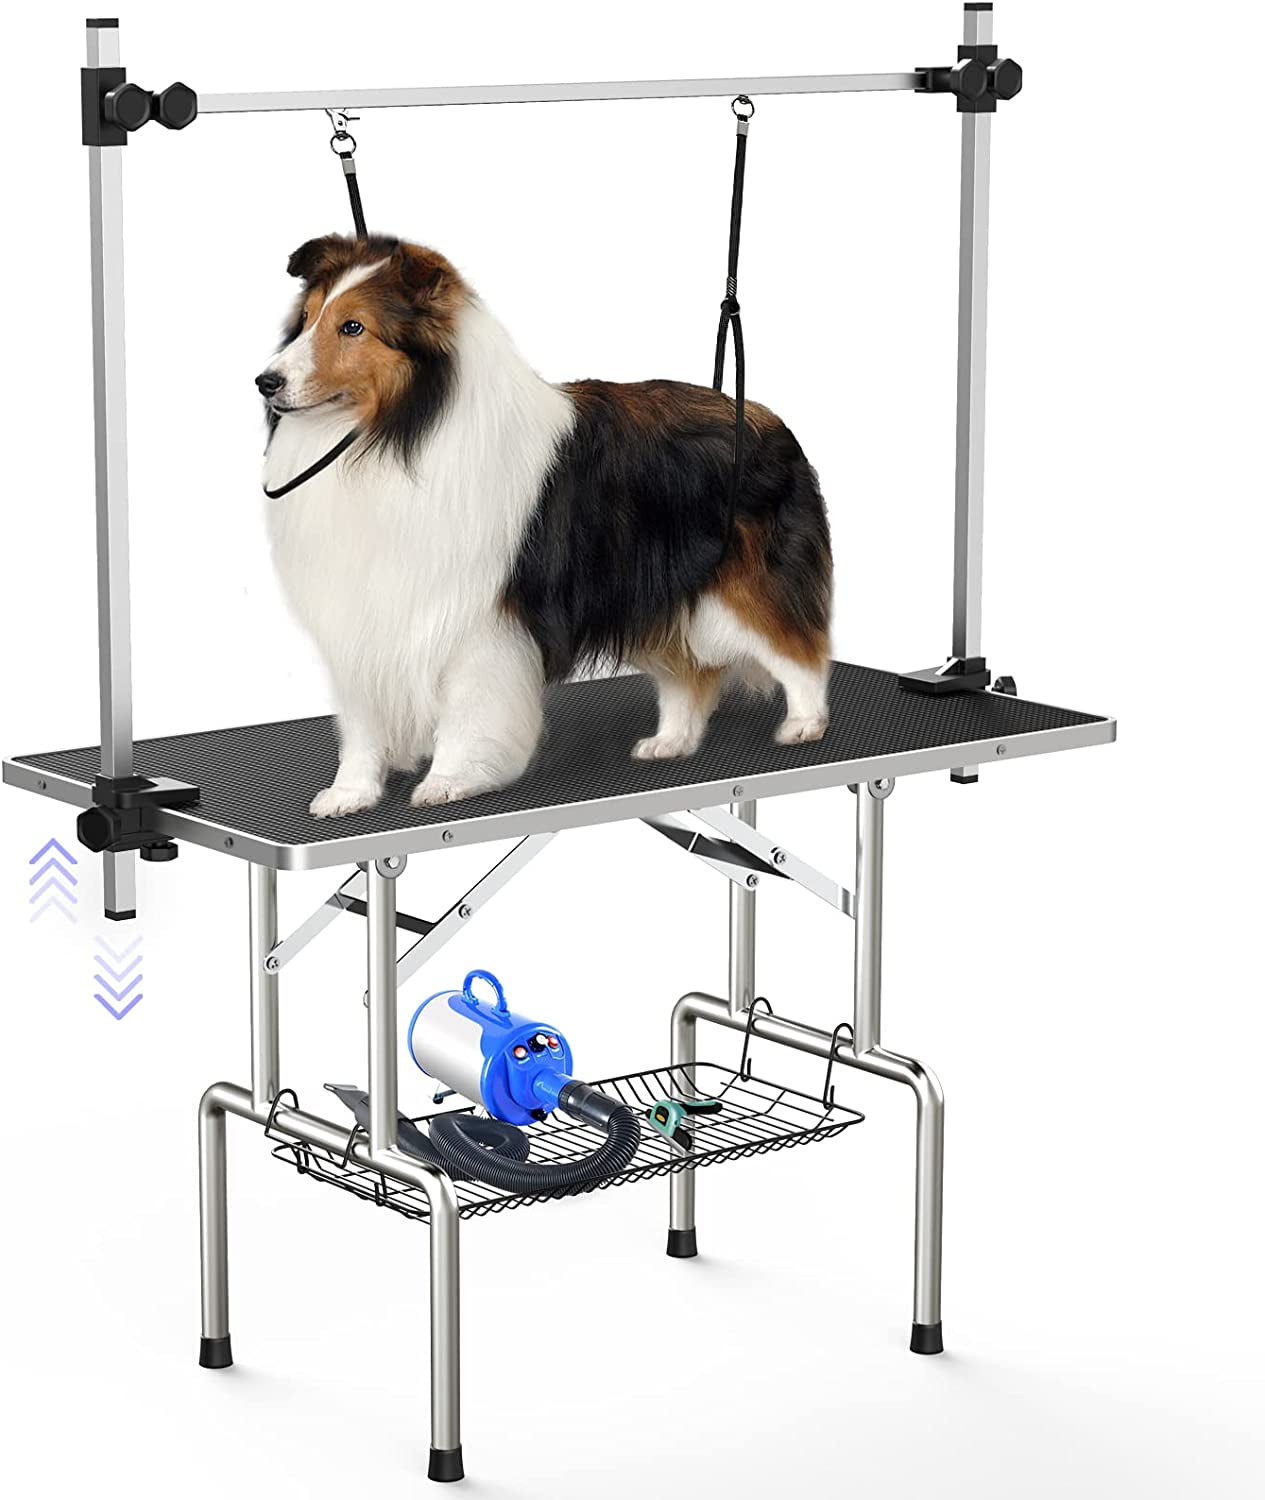 BUG HULL Pet Grooming Table, 330 lbs Capacity Folding Dog Grooming